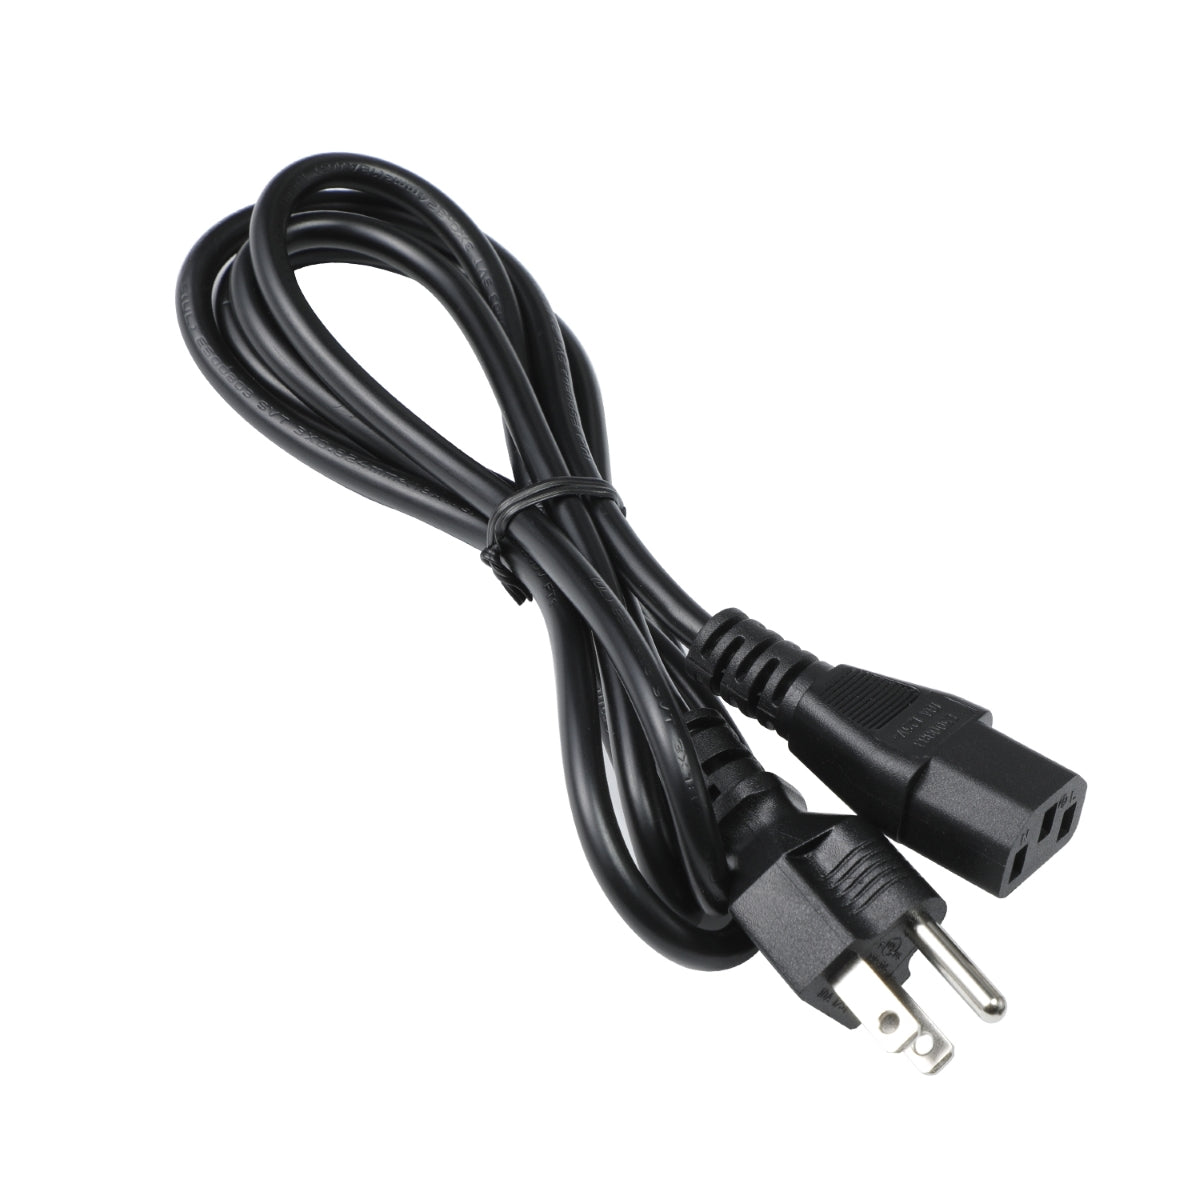 Power Cord for Dell U2723QE Monitor